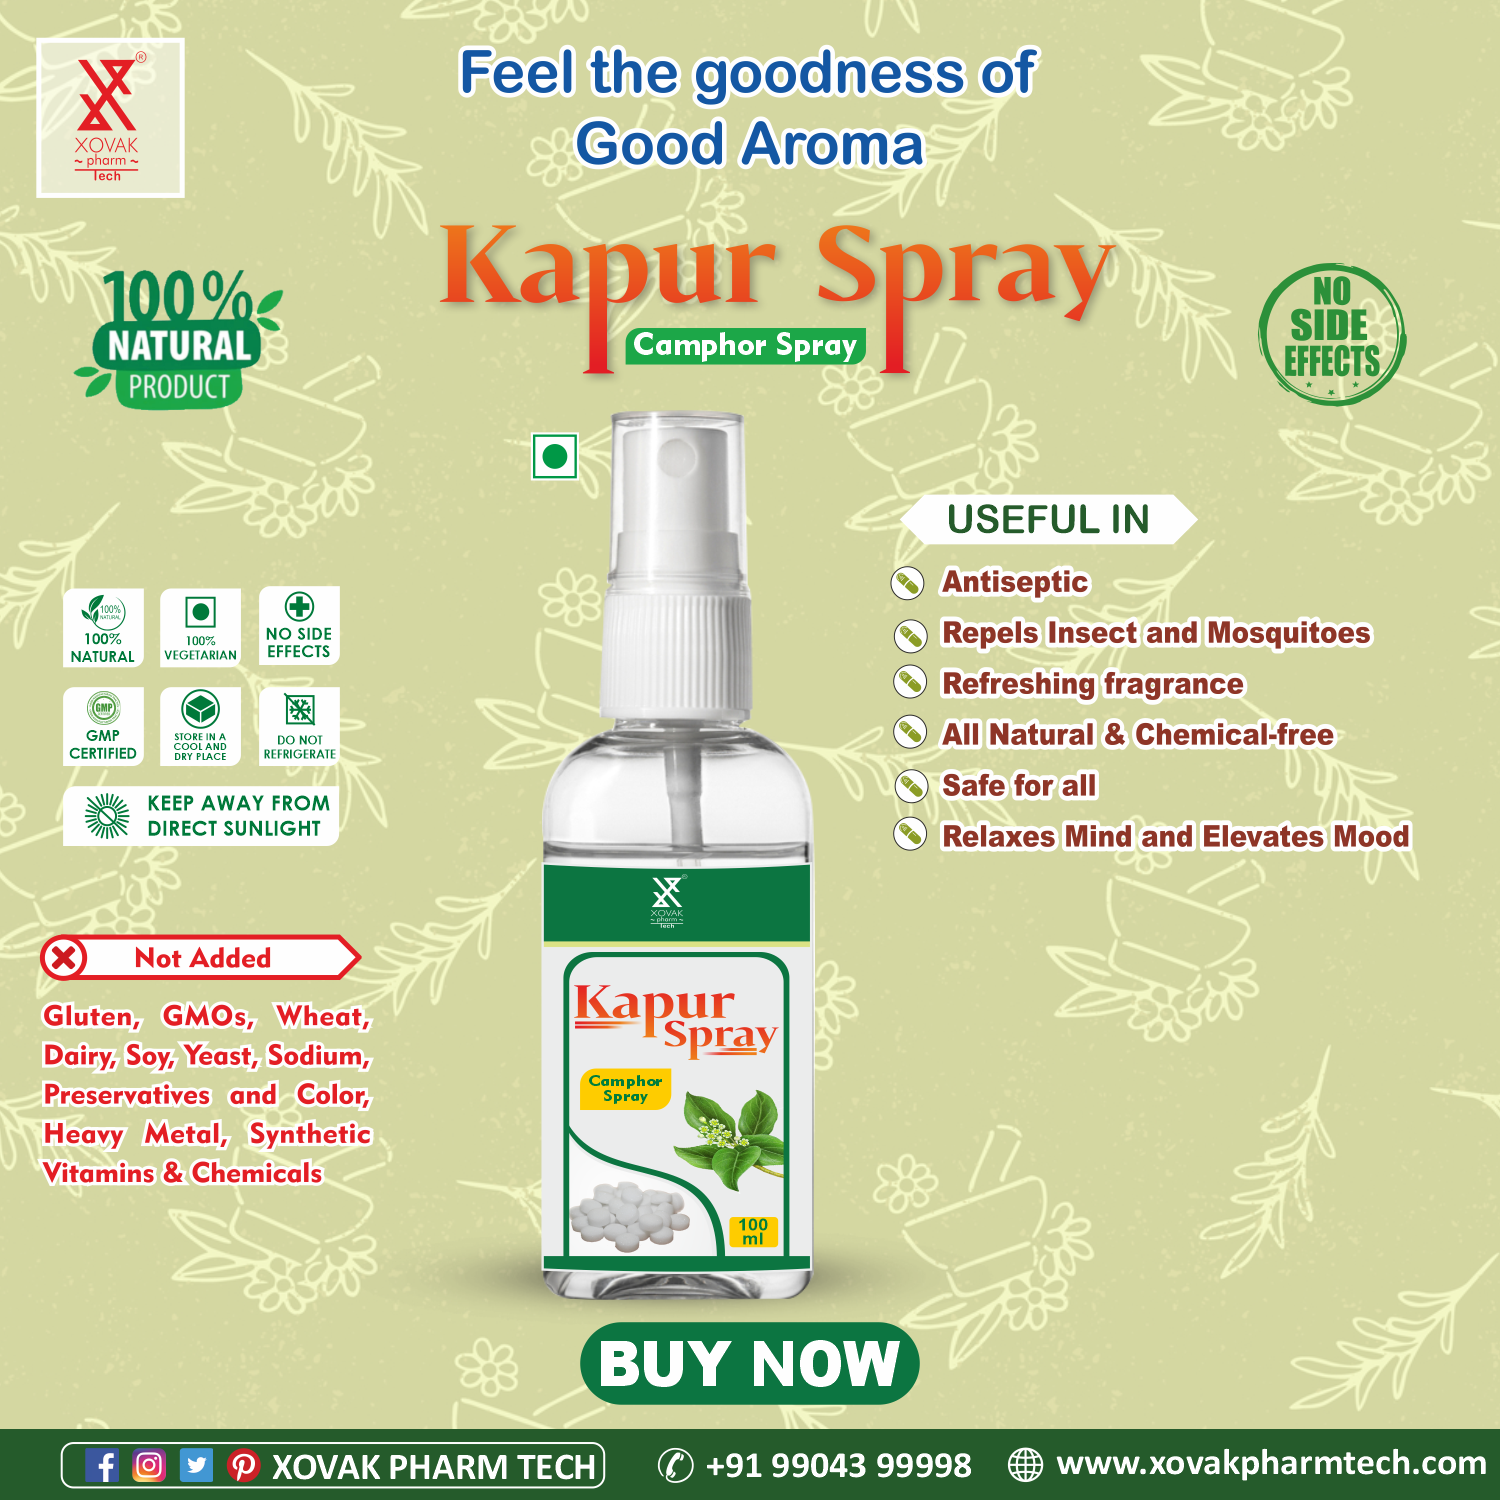 Buy Xovak Pharmtech Kapur Spray at Best Price Online